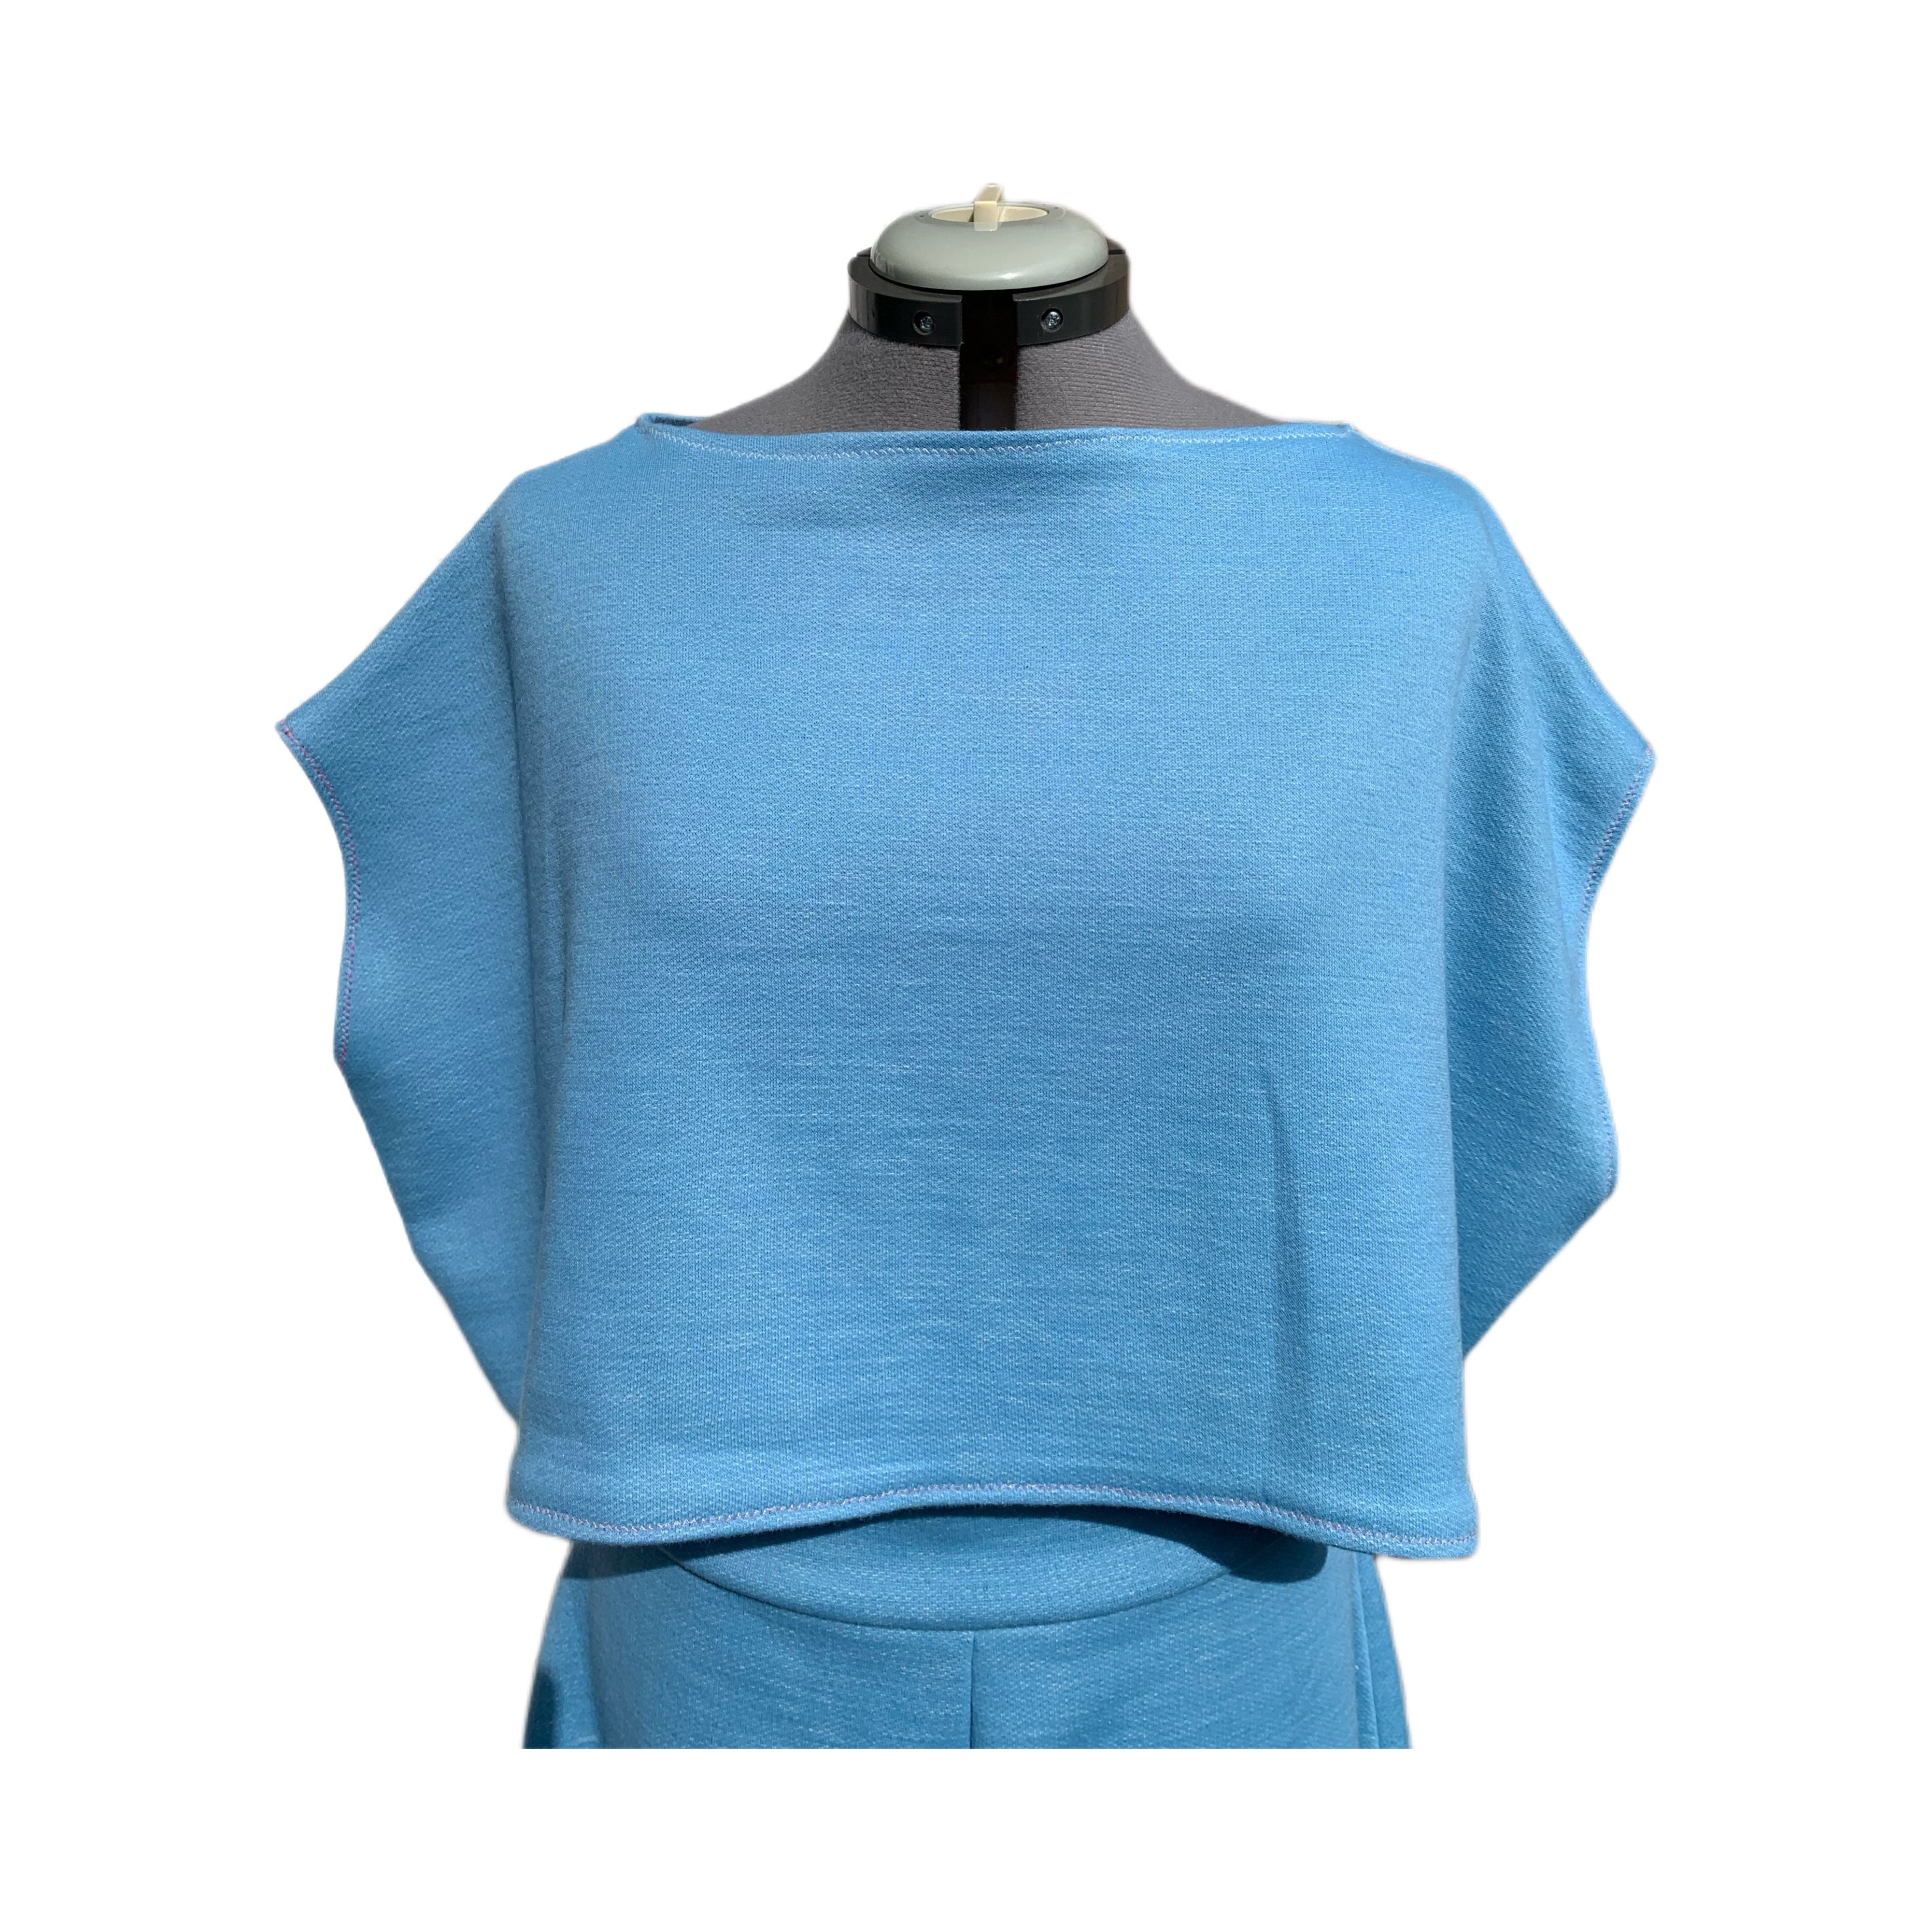 ladies handmade knit fabric blue sleeveless boagtneck croptop